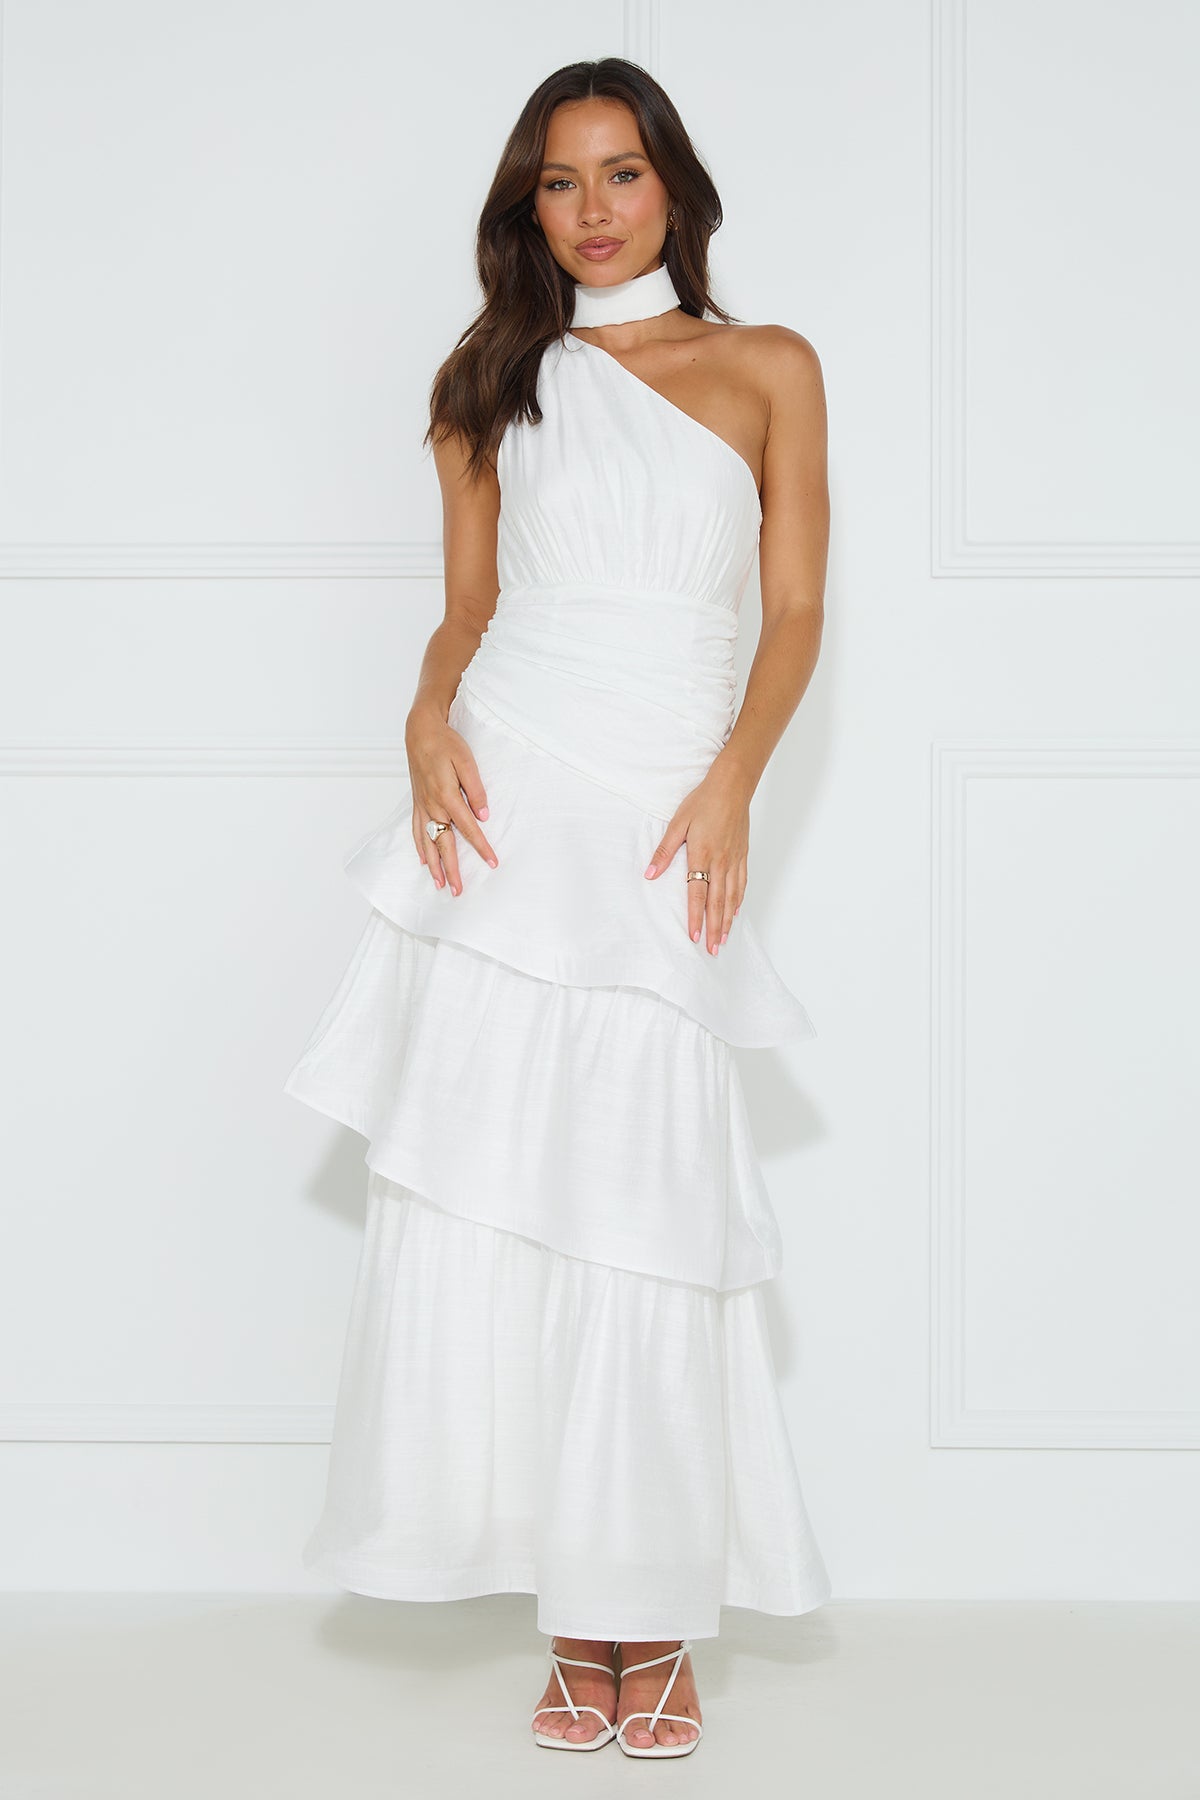 Shop Formal Dress - Cara One Shoulder Maxi Dress White featured image